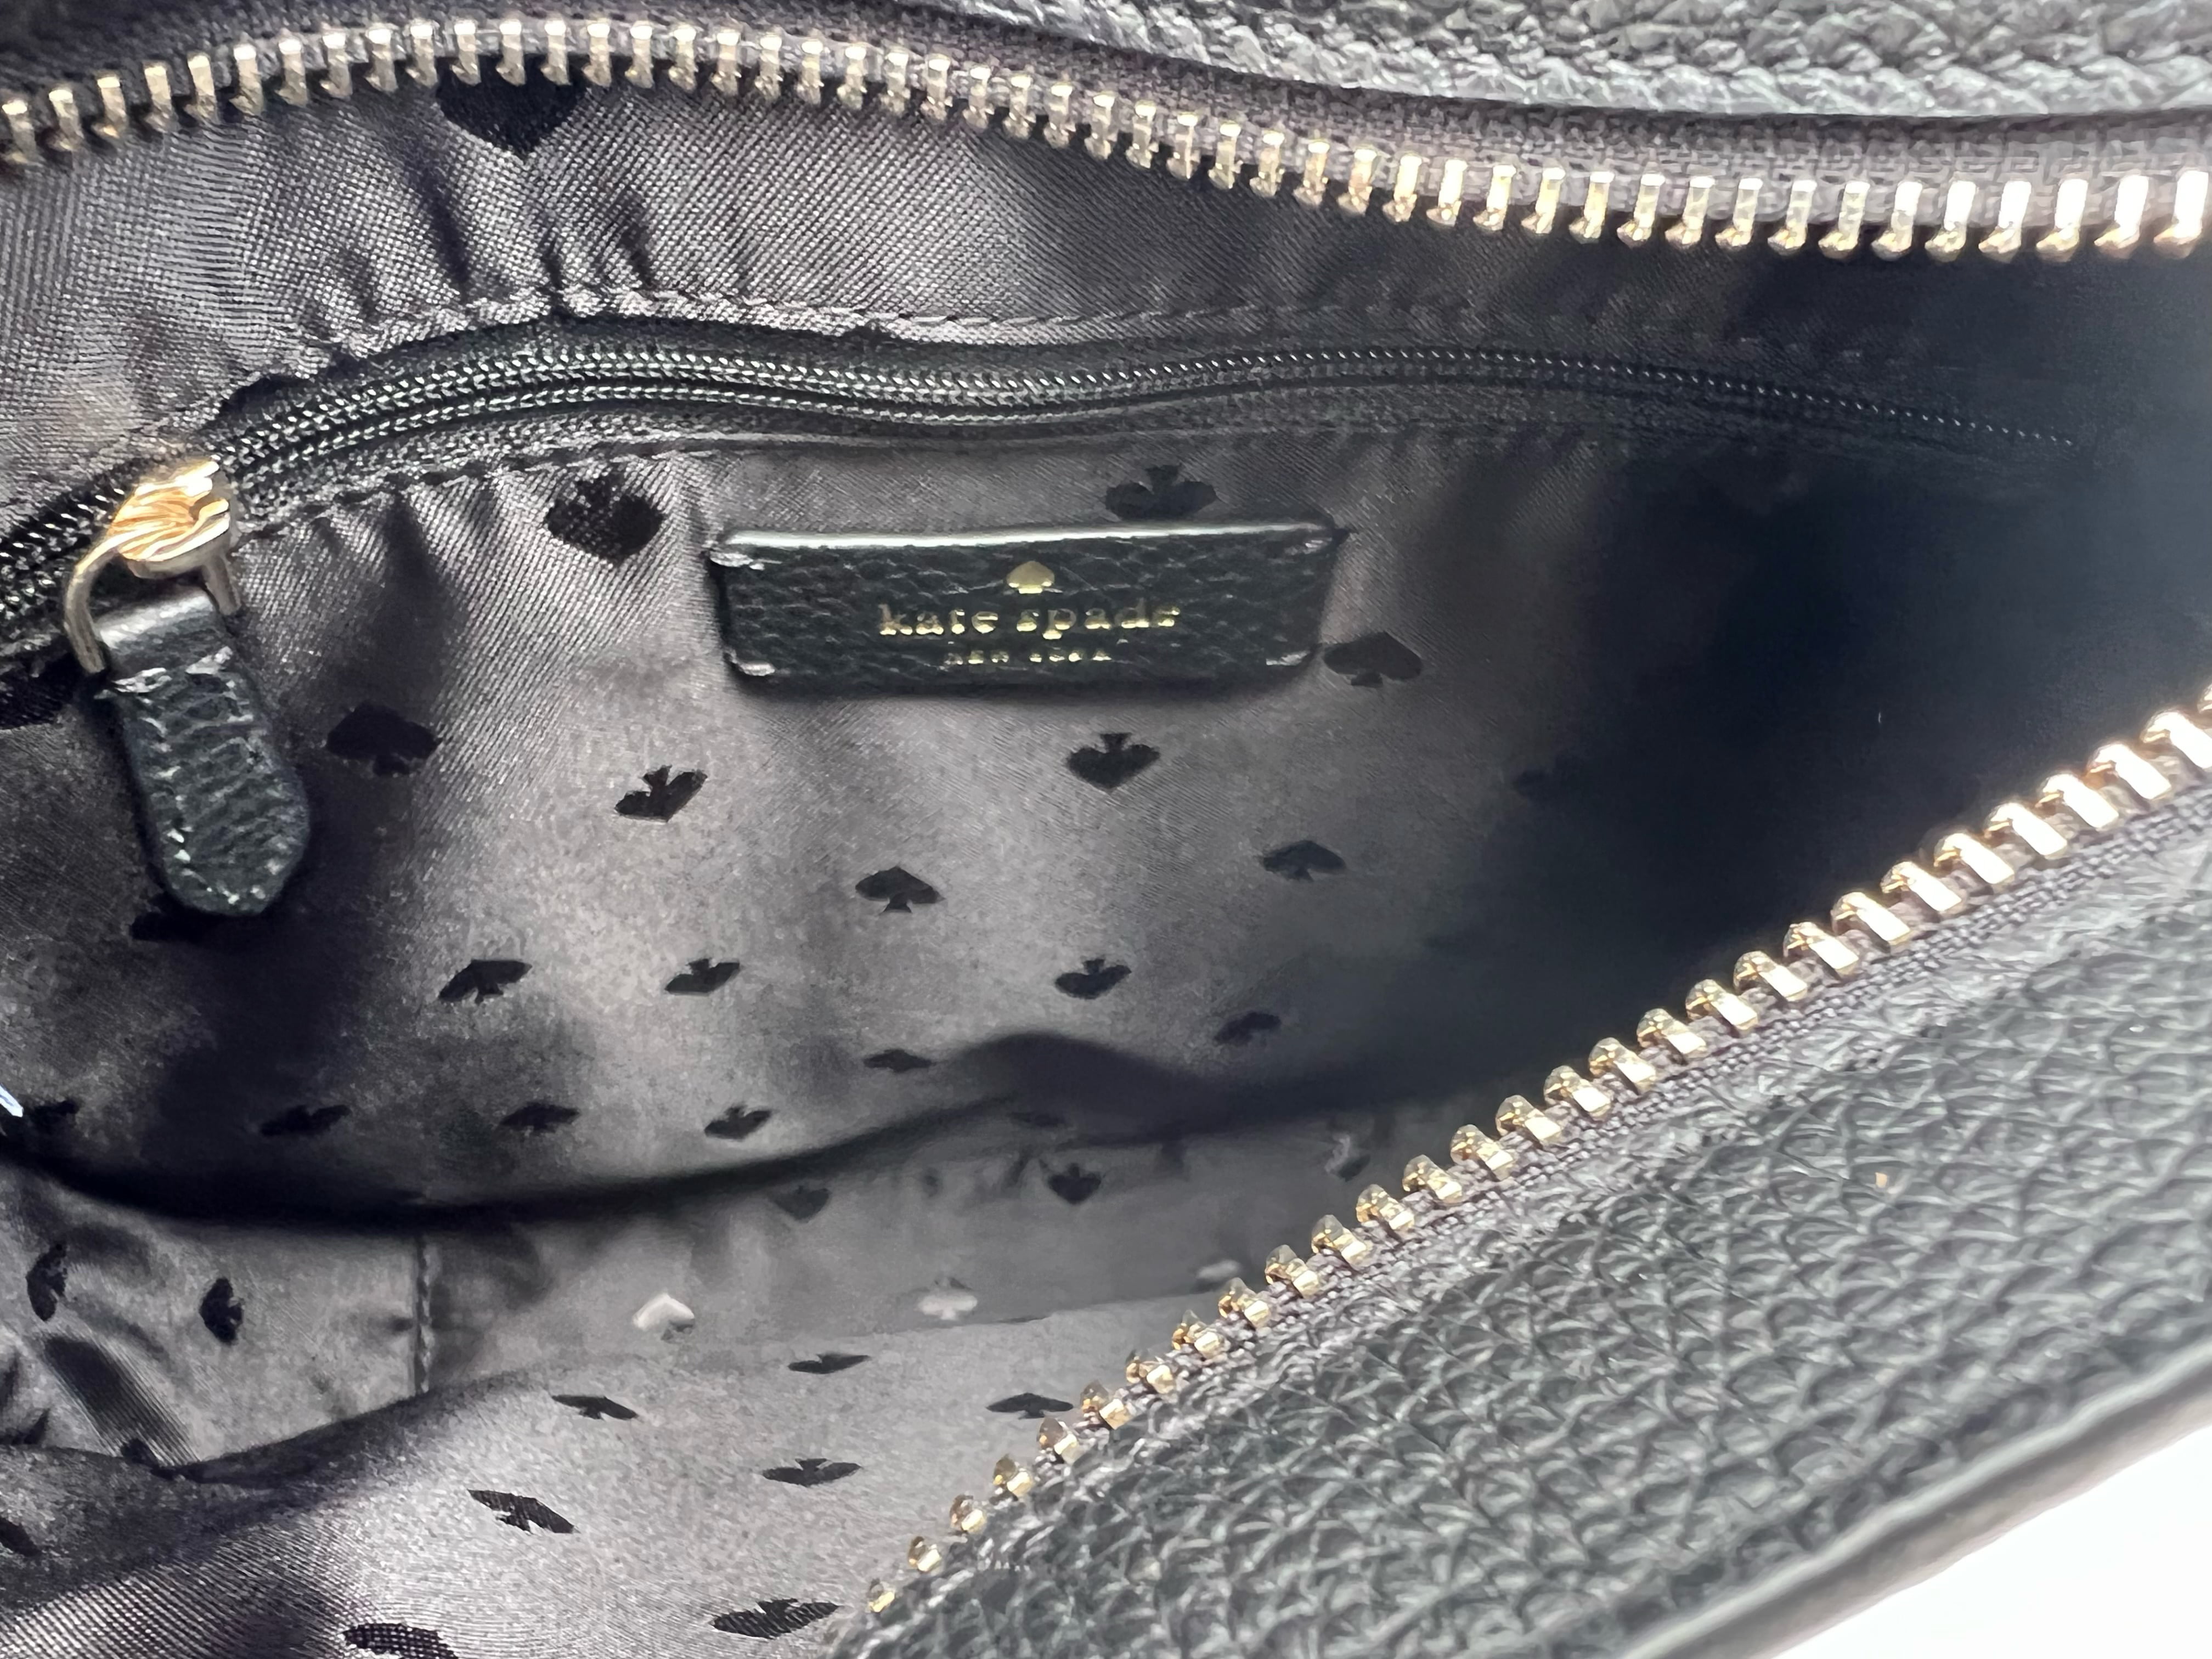 Leila Medium Calvert Leather Crossbody Bag in Old Black